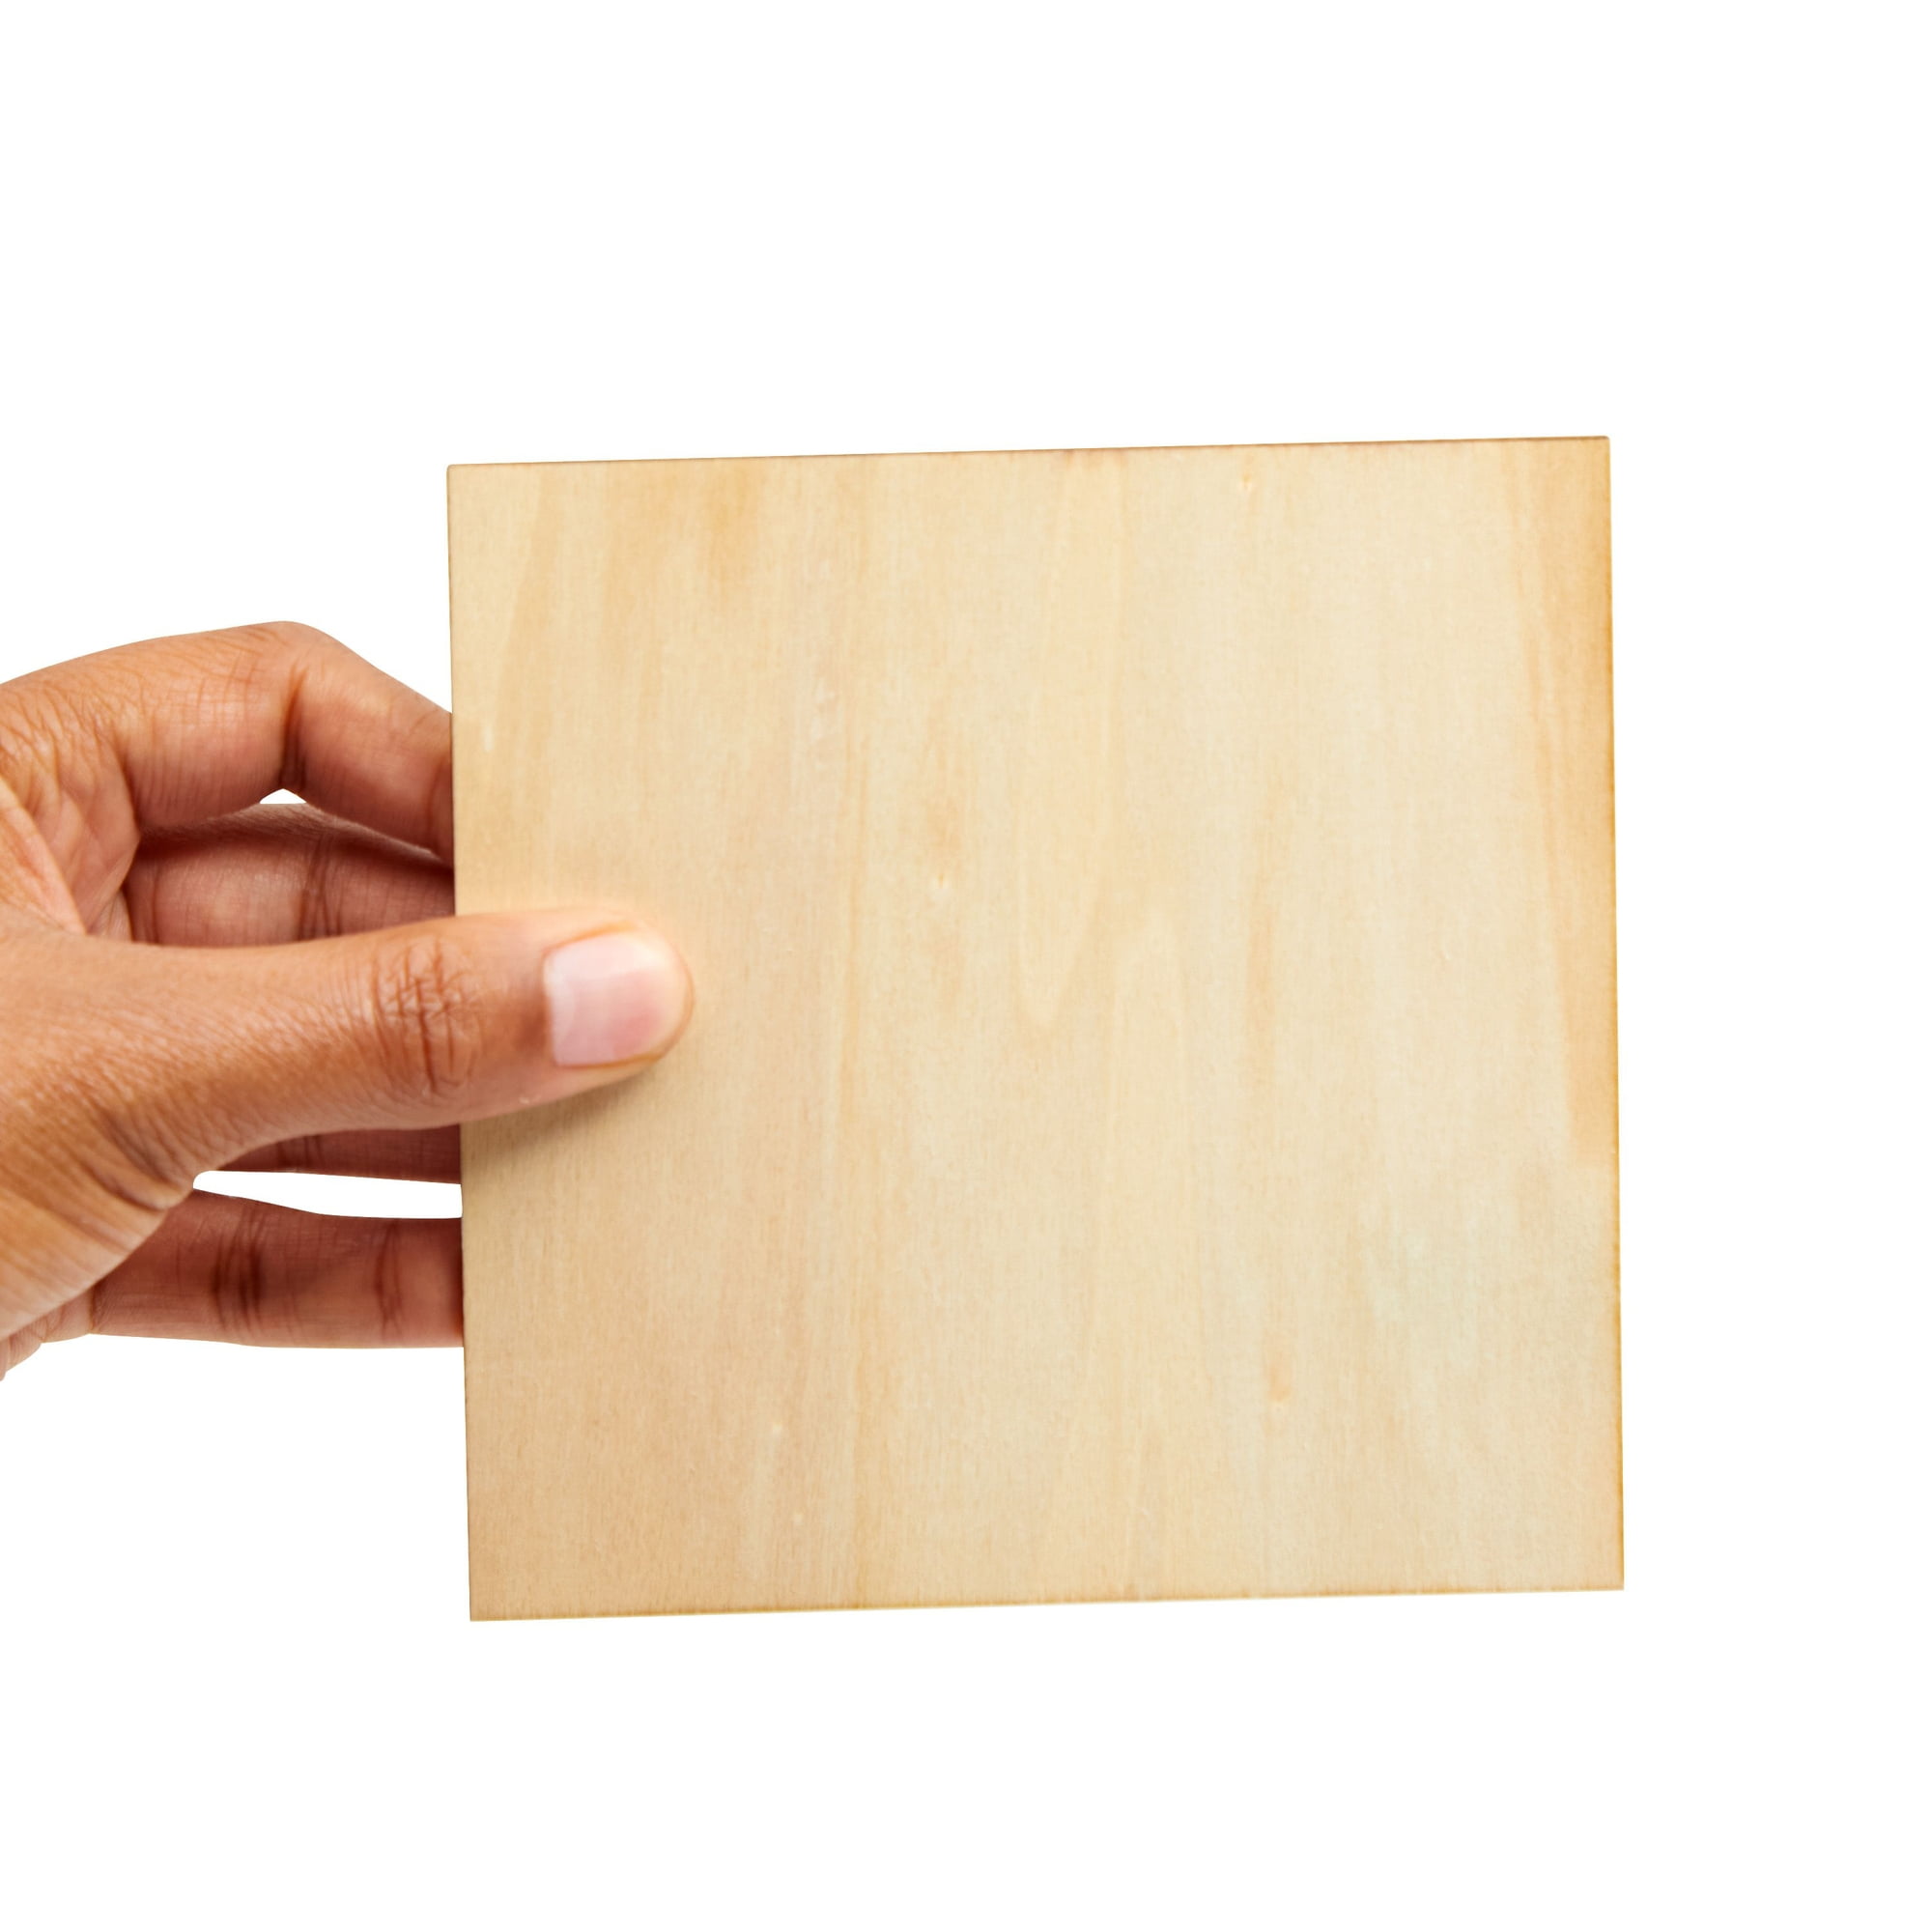 4x4 wood squares｜TikTok Search